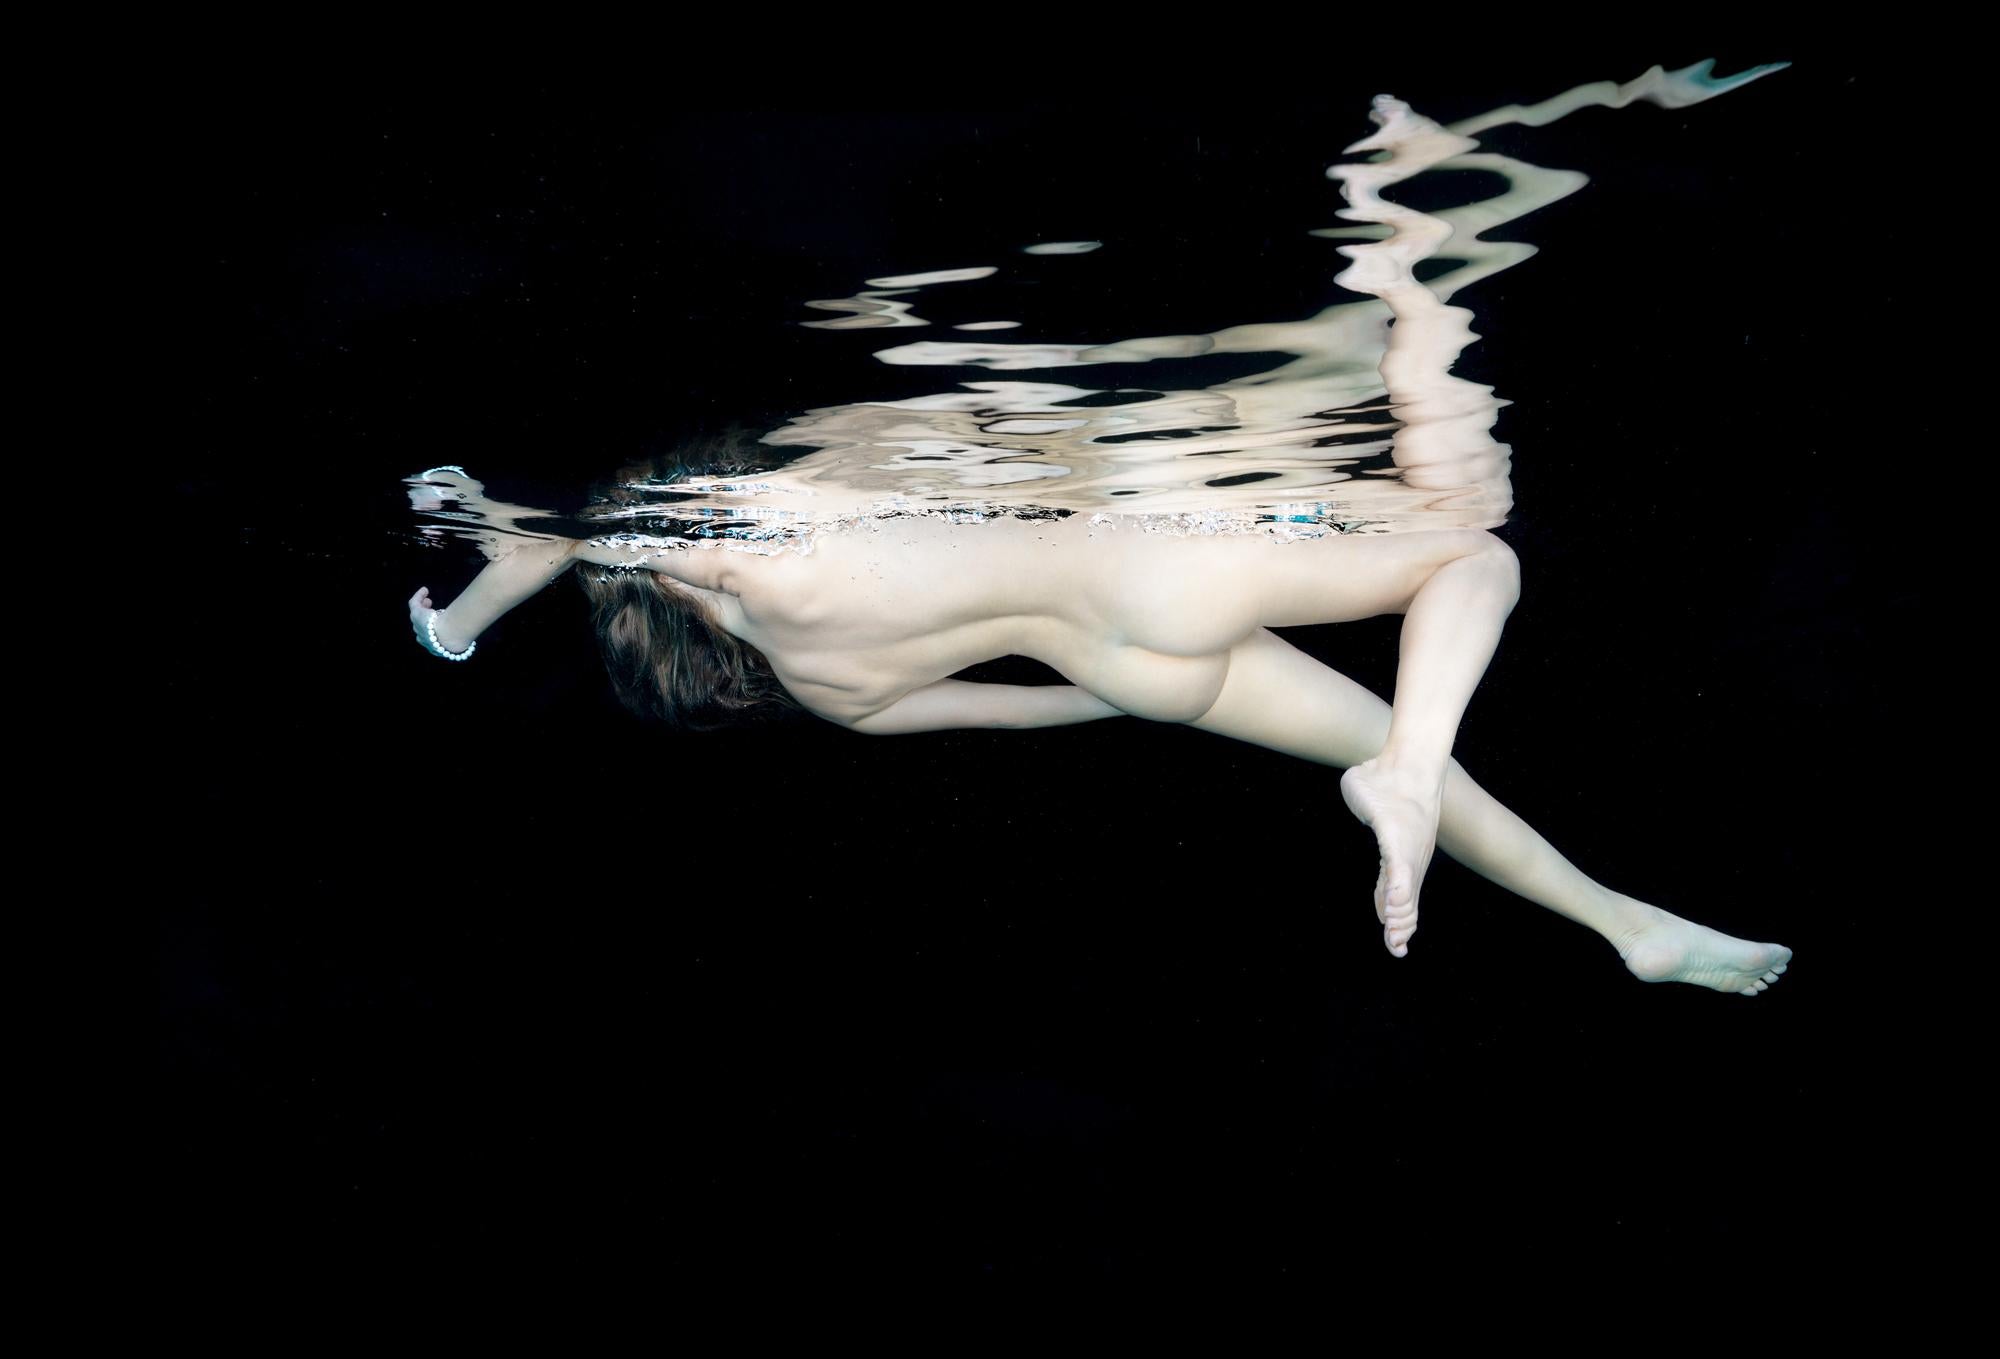 Alex Sher Nude Photograph - Porcelain II  - underwater nude photograph - archival pigment print 43x64"